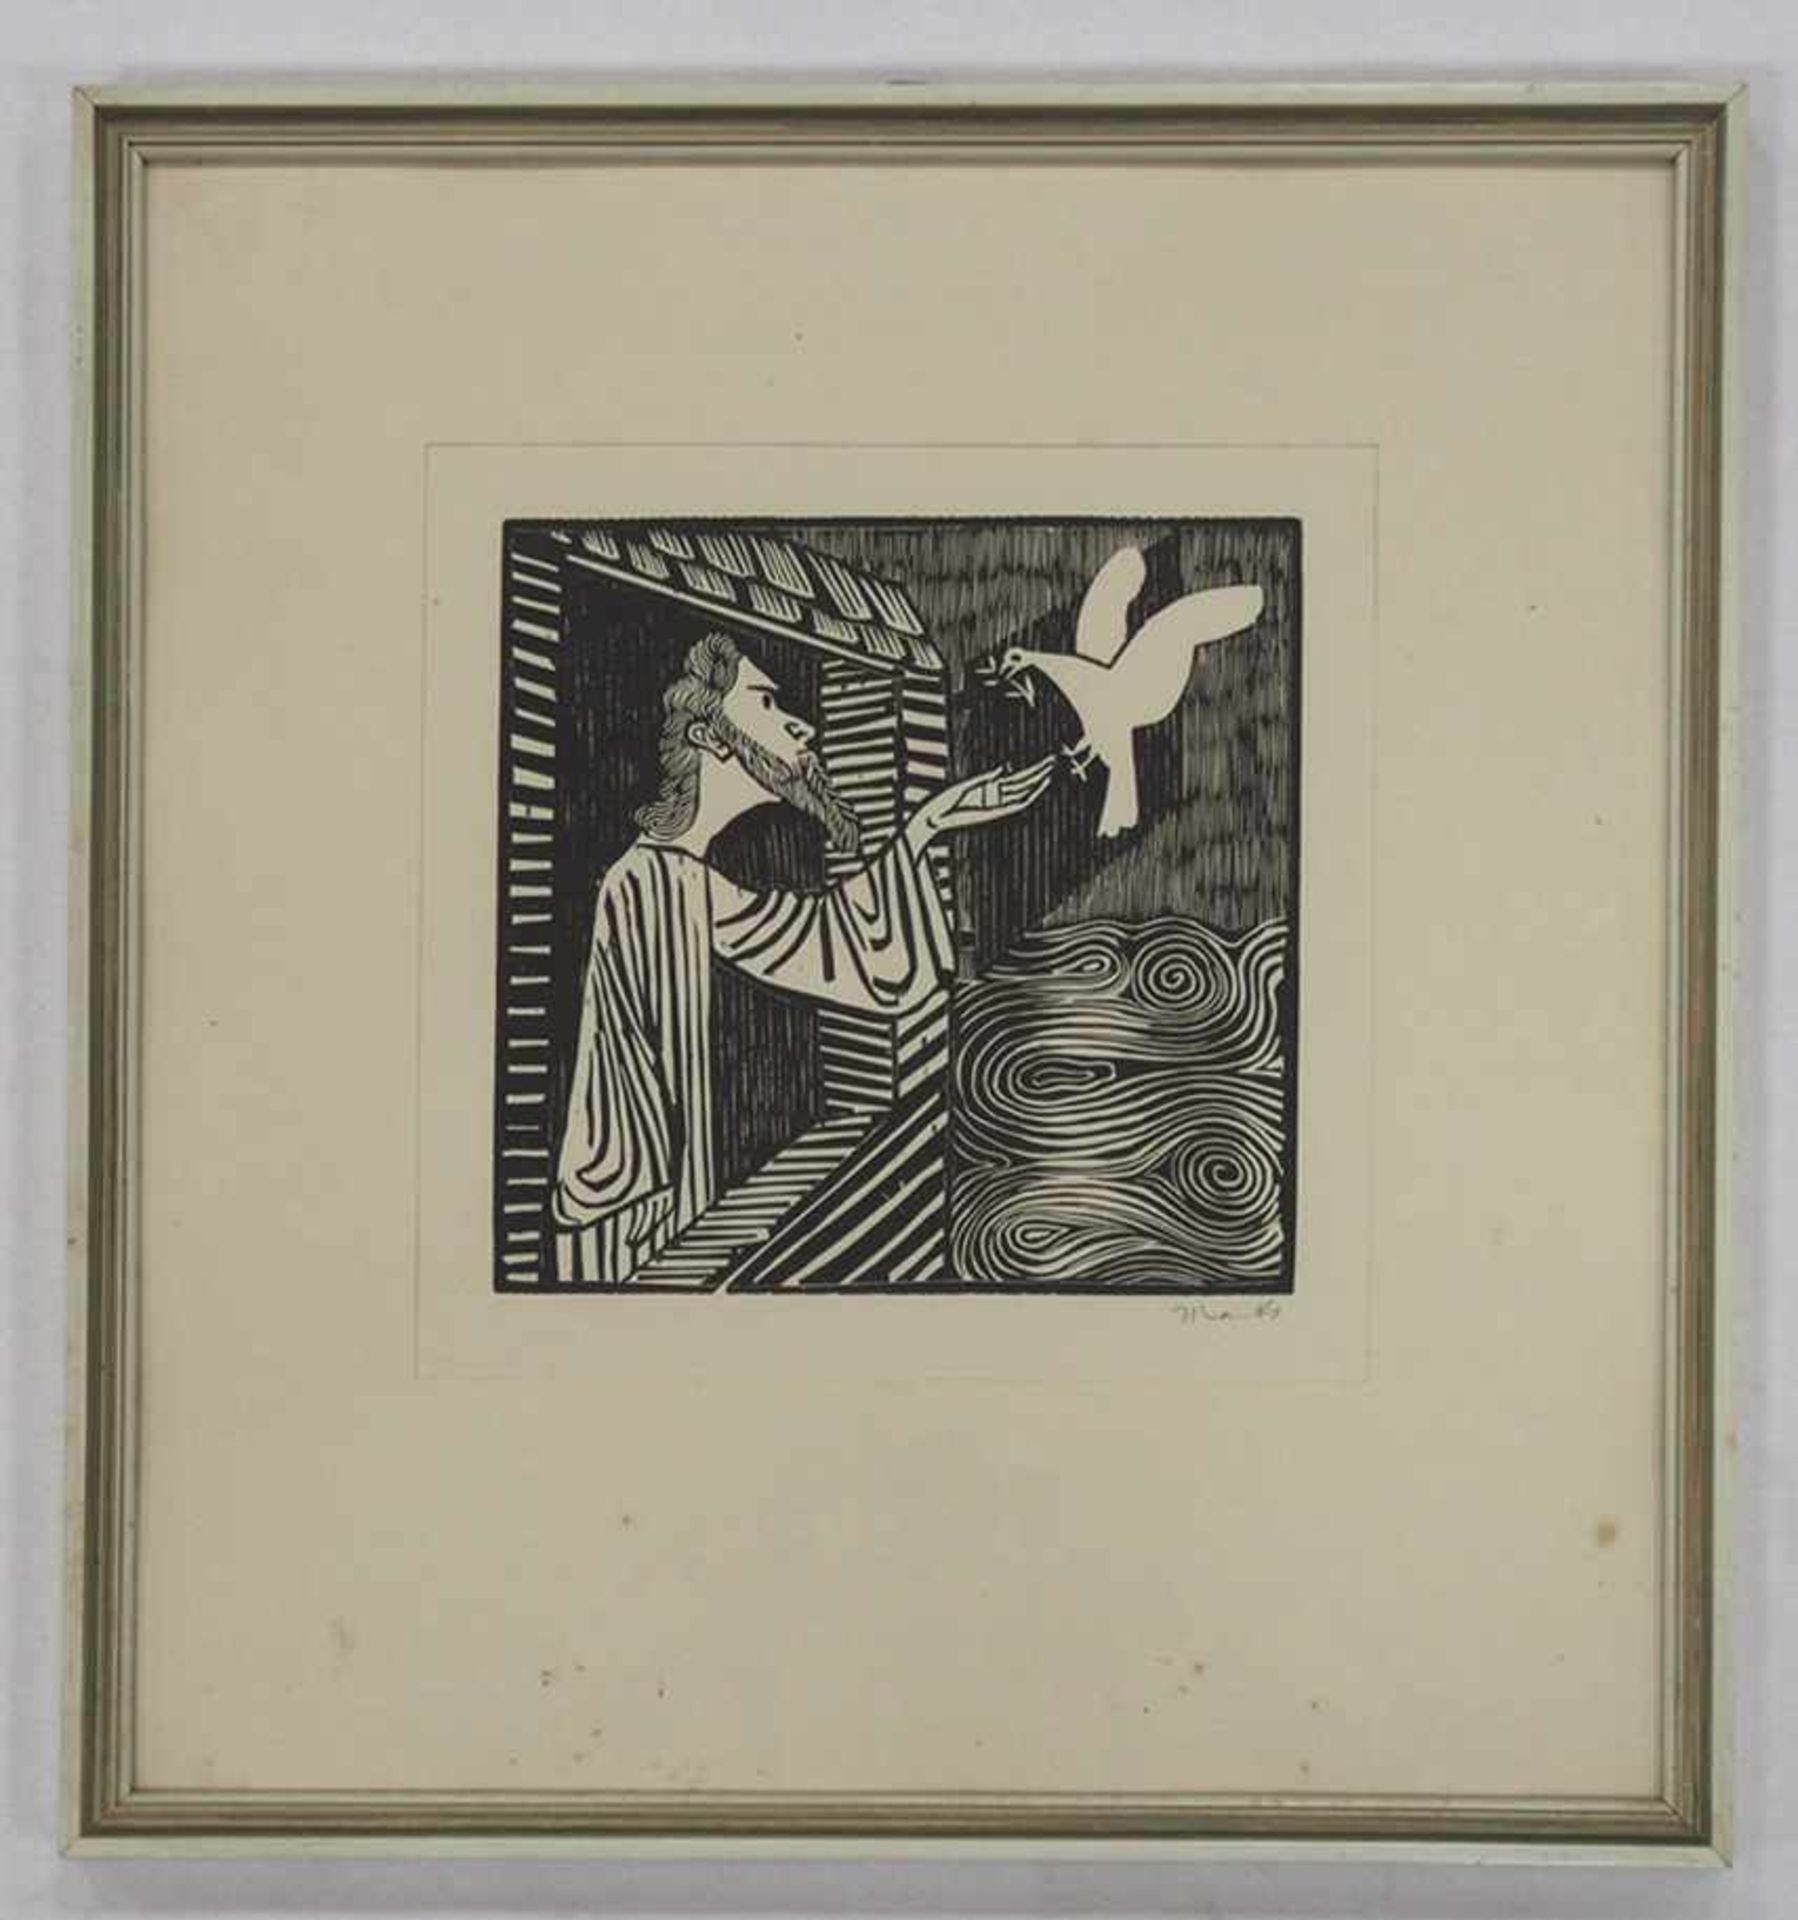 MARCKS, Gerhard1889-1981NoahHolzschnitt, signiert unten rechts, 23,5 x 23,5 cm, gerahmt unter Glas - Bild 2 aus 2